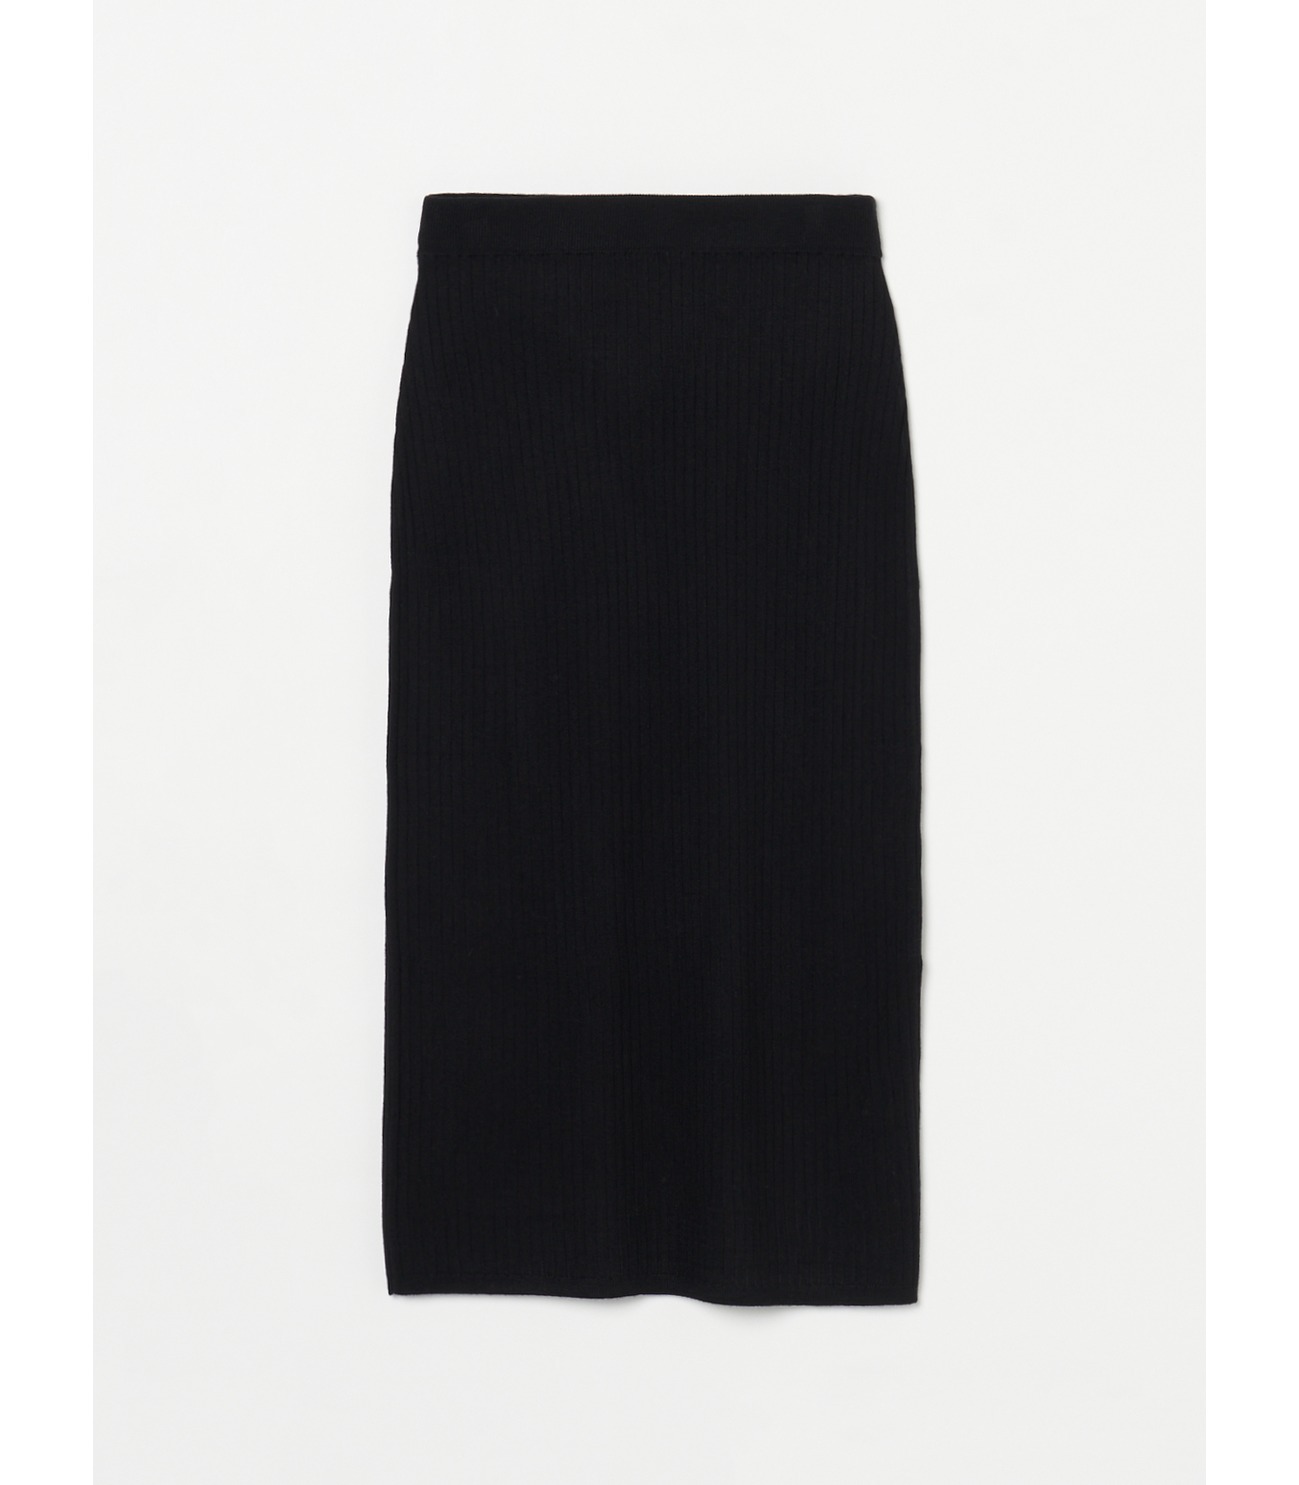 Moist pencil skirt 詳細画像 black 2